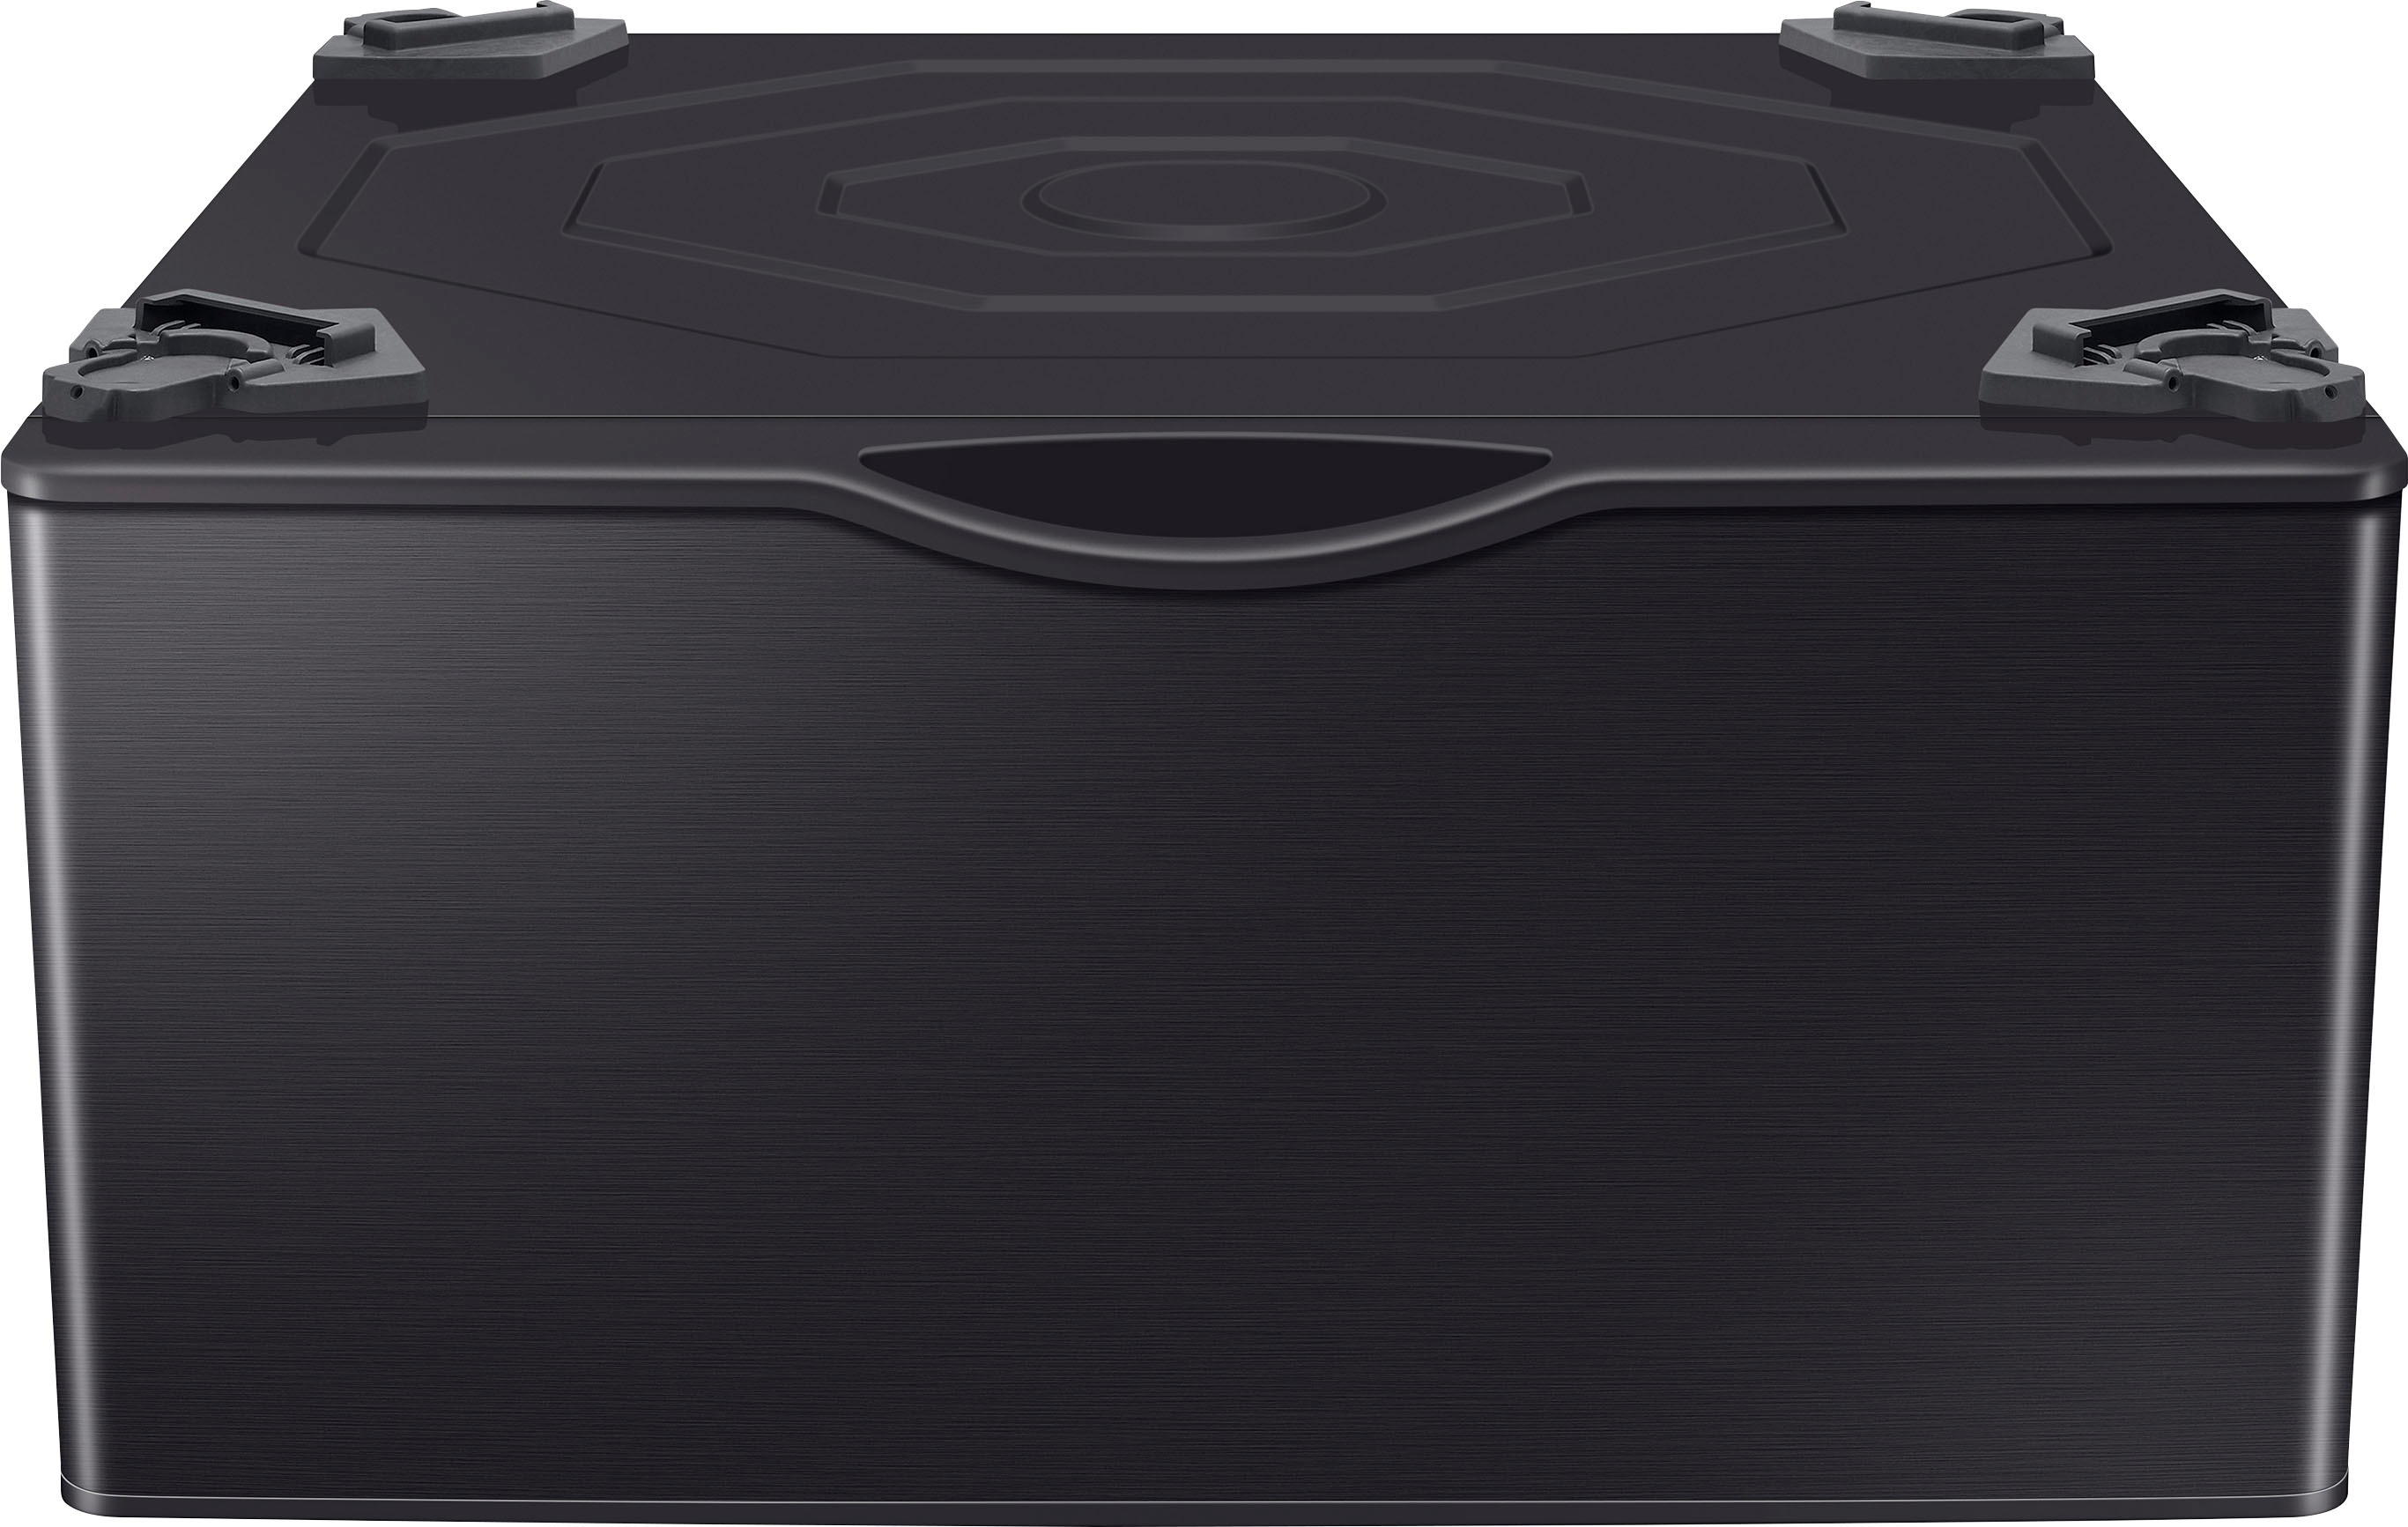 Samsung Washer/Dryer Laundry Pedestal with Storage Drawer Brushed Black